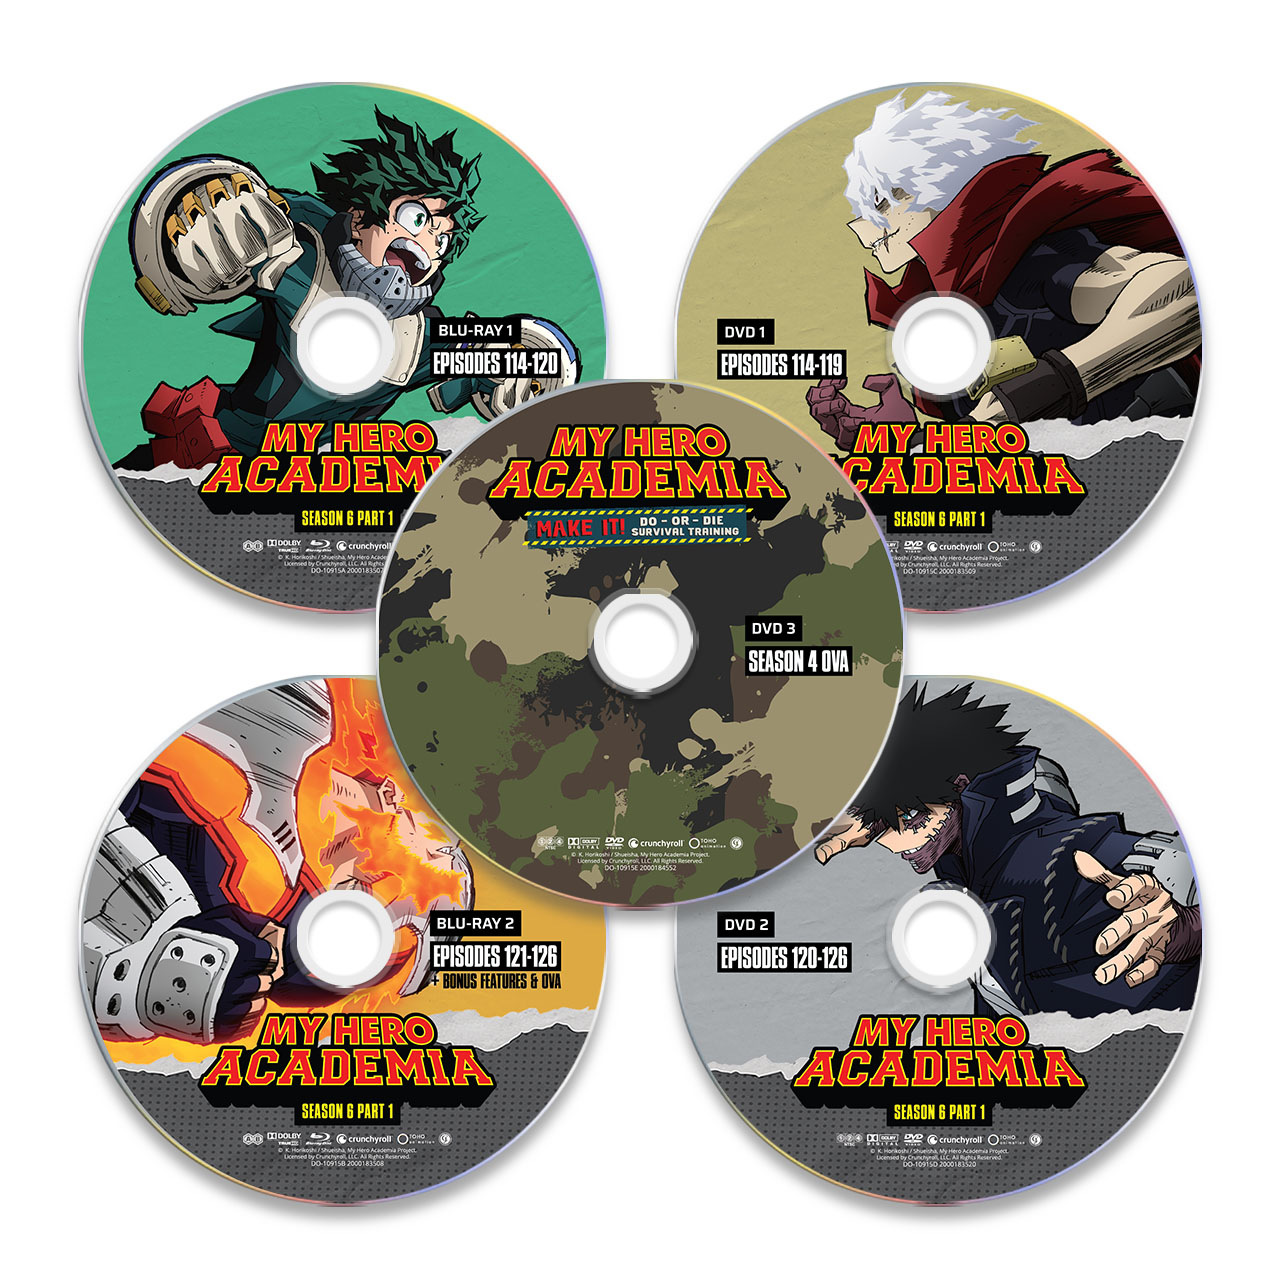 My Hero Academia - Season 6 Part 1 - Blu-ray + DVD image count 3